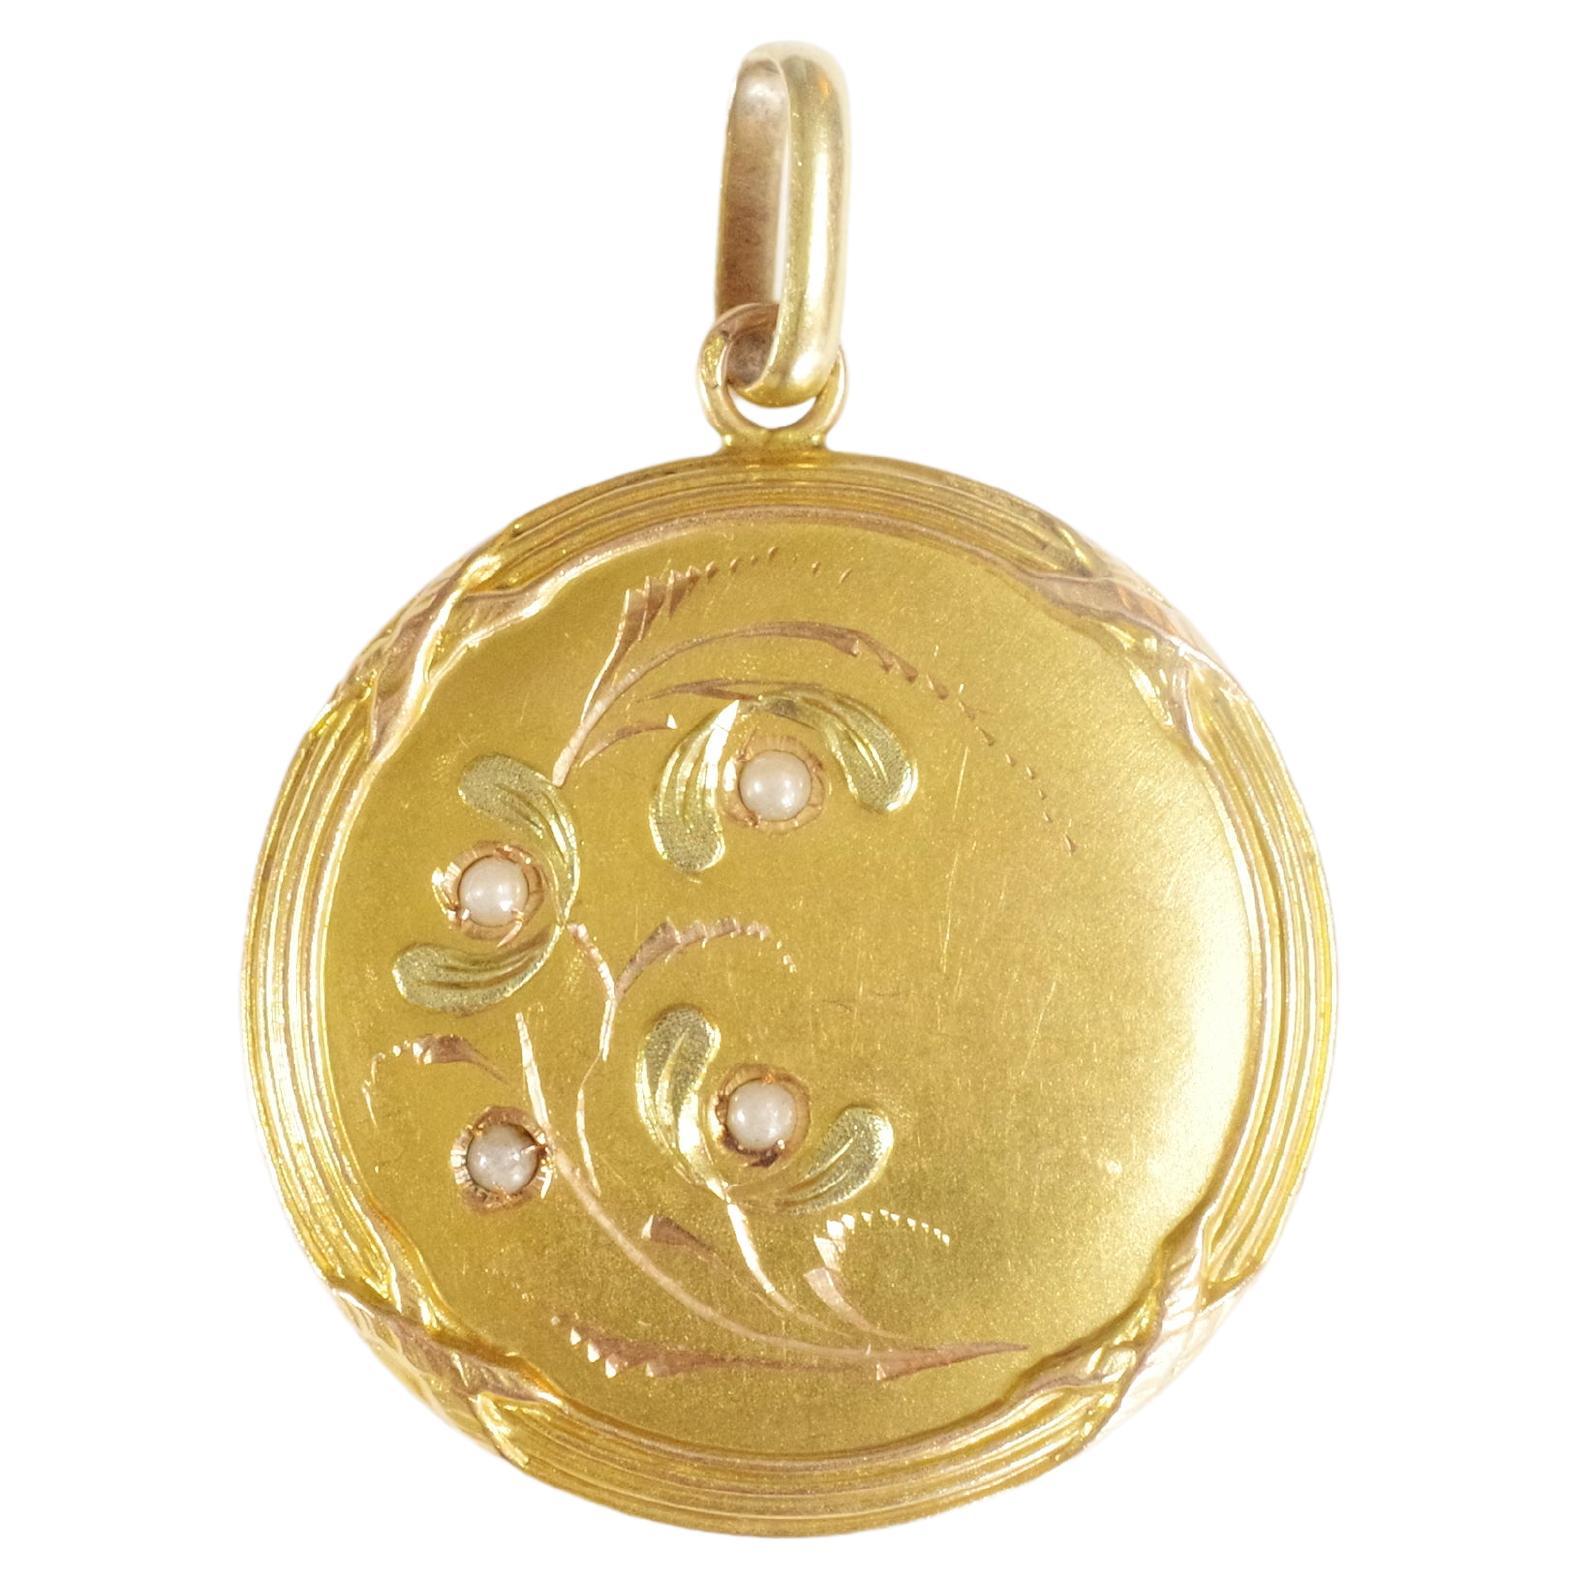 Edwardian Art Nouveau Mistletoe Pendant, Antique Circular Medallion Locket Gold